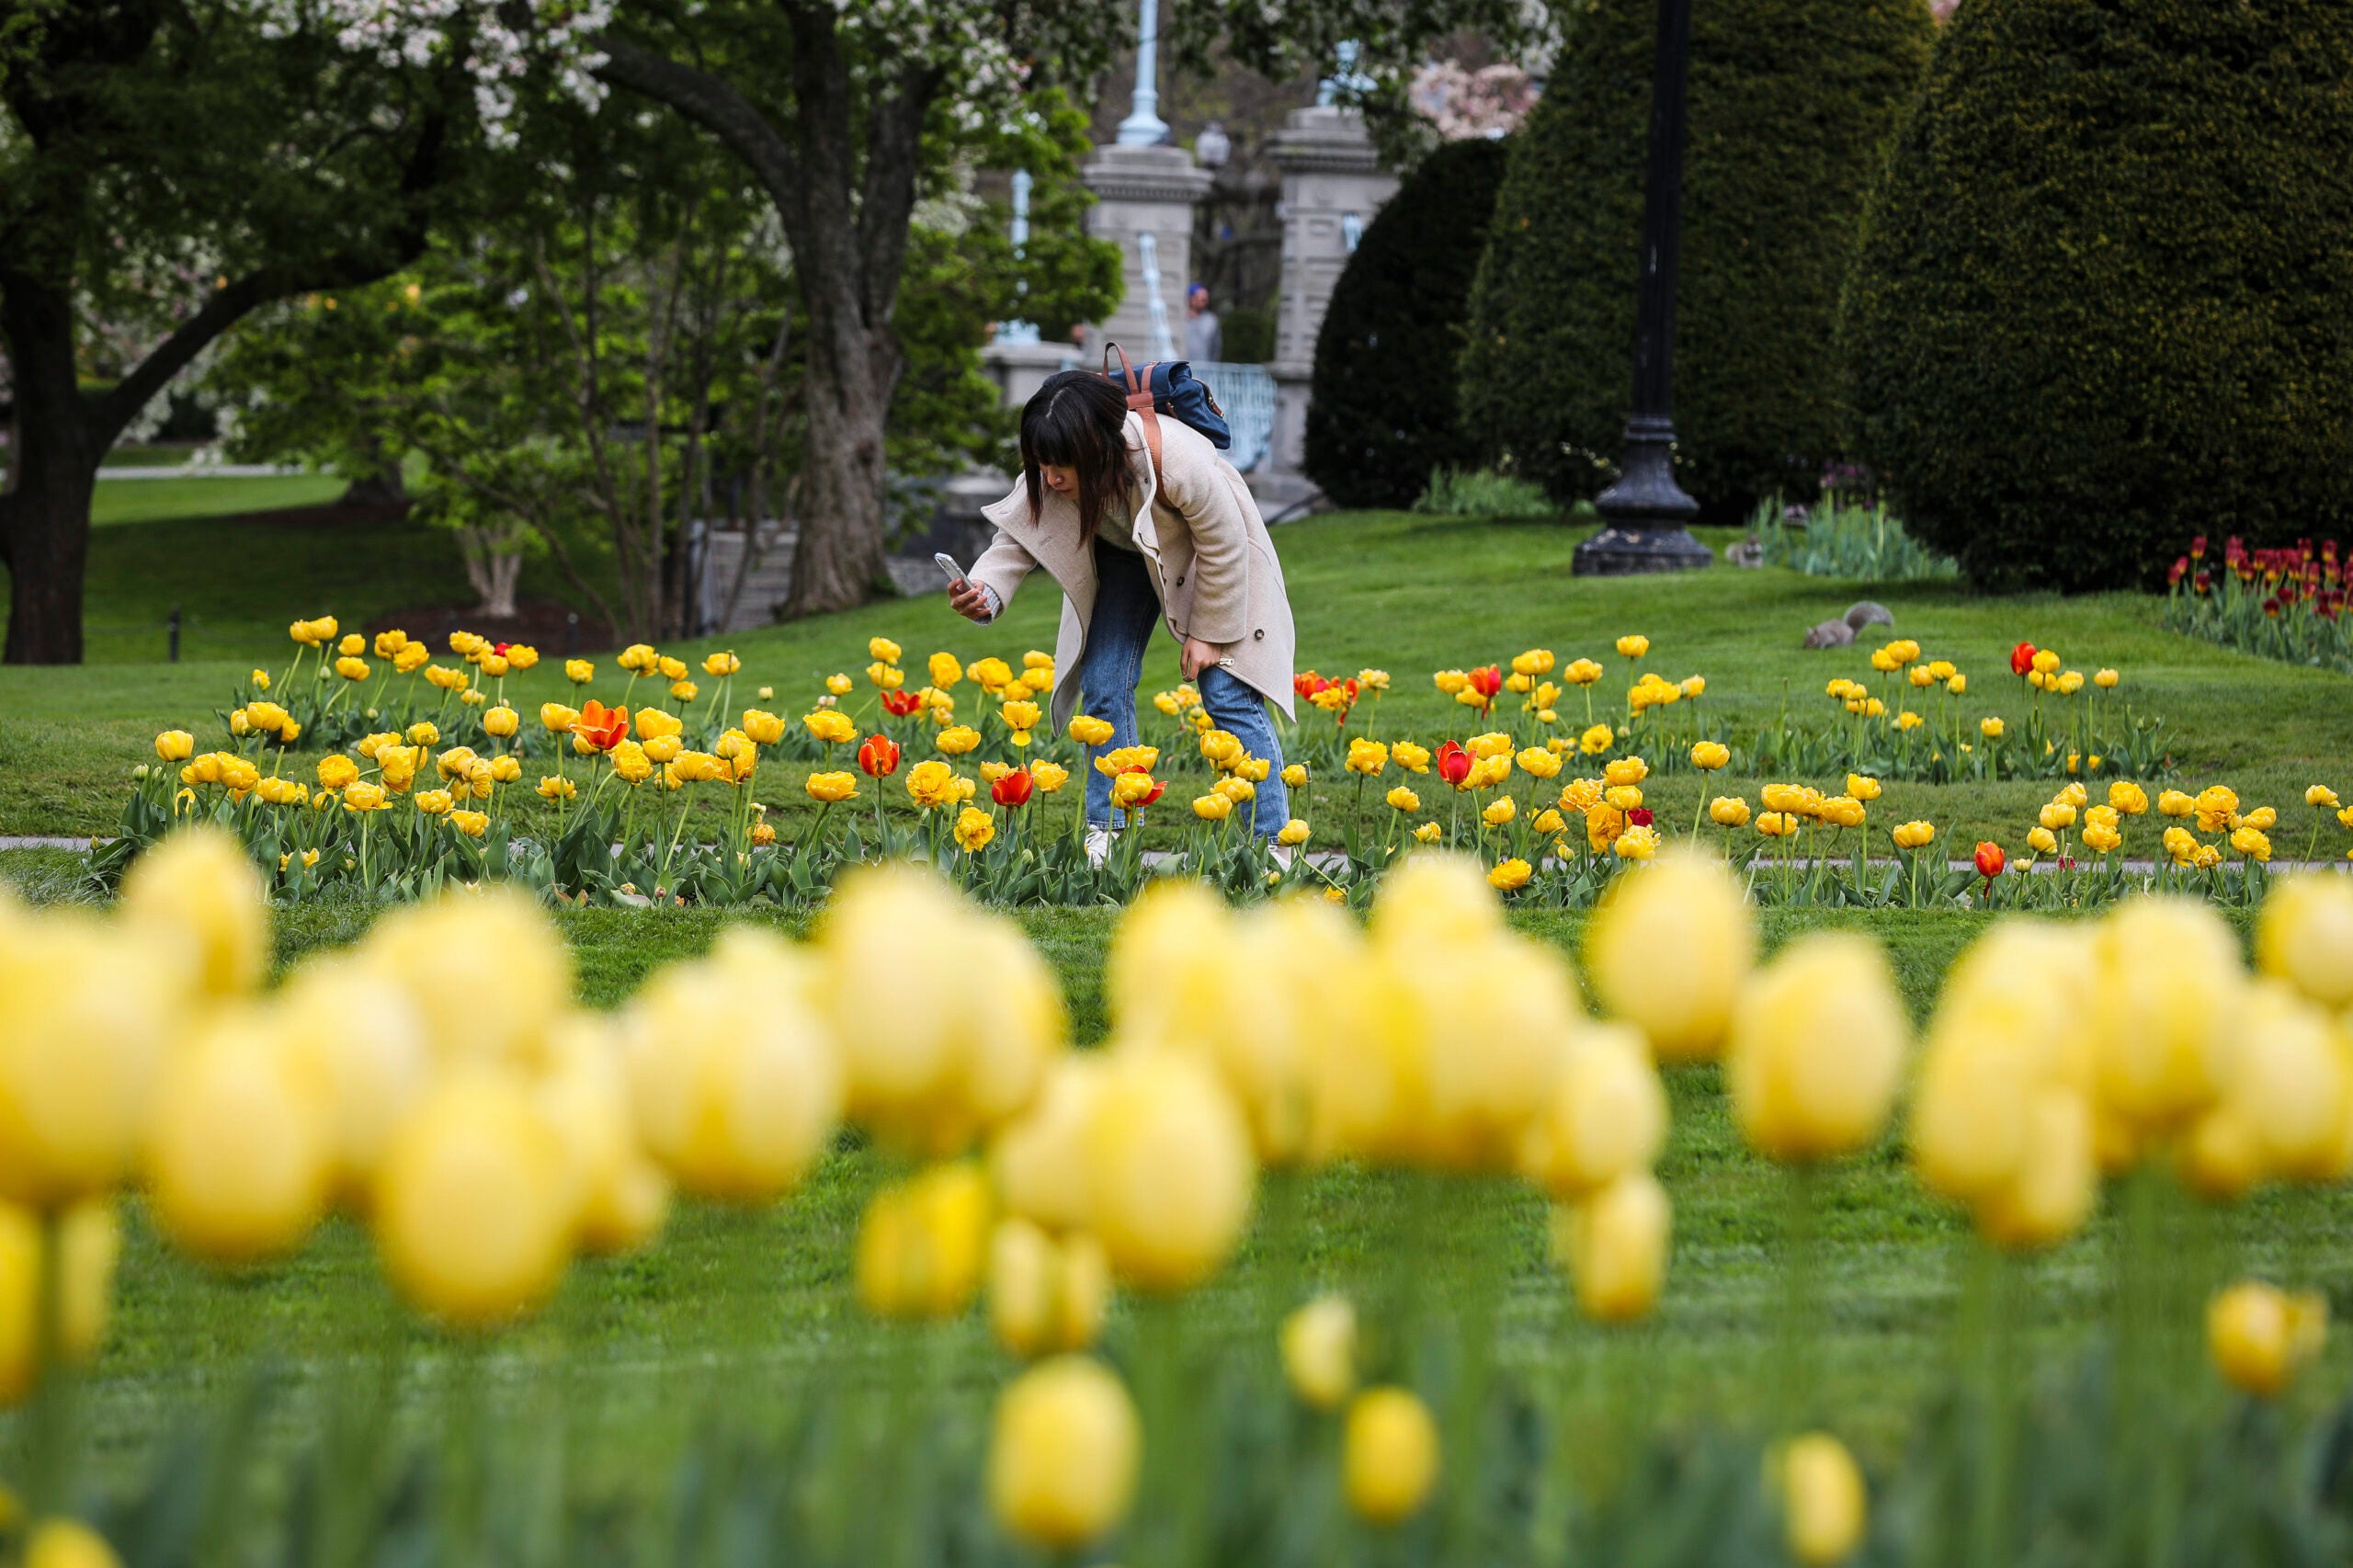 Boston weather -- A woman photographs yellow tulips as she strolls through Boston’s Public Garden.